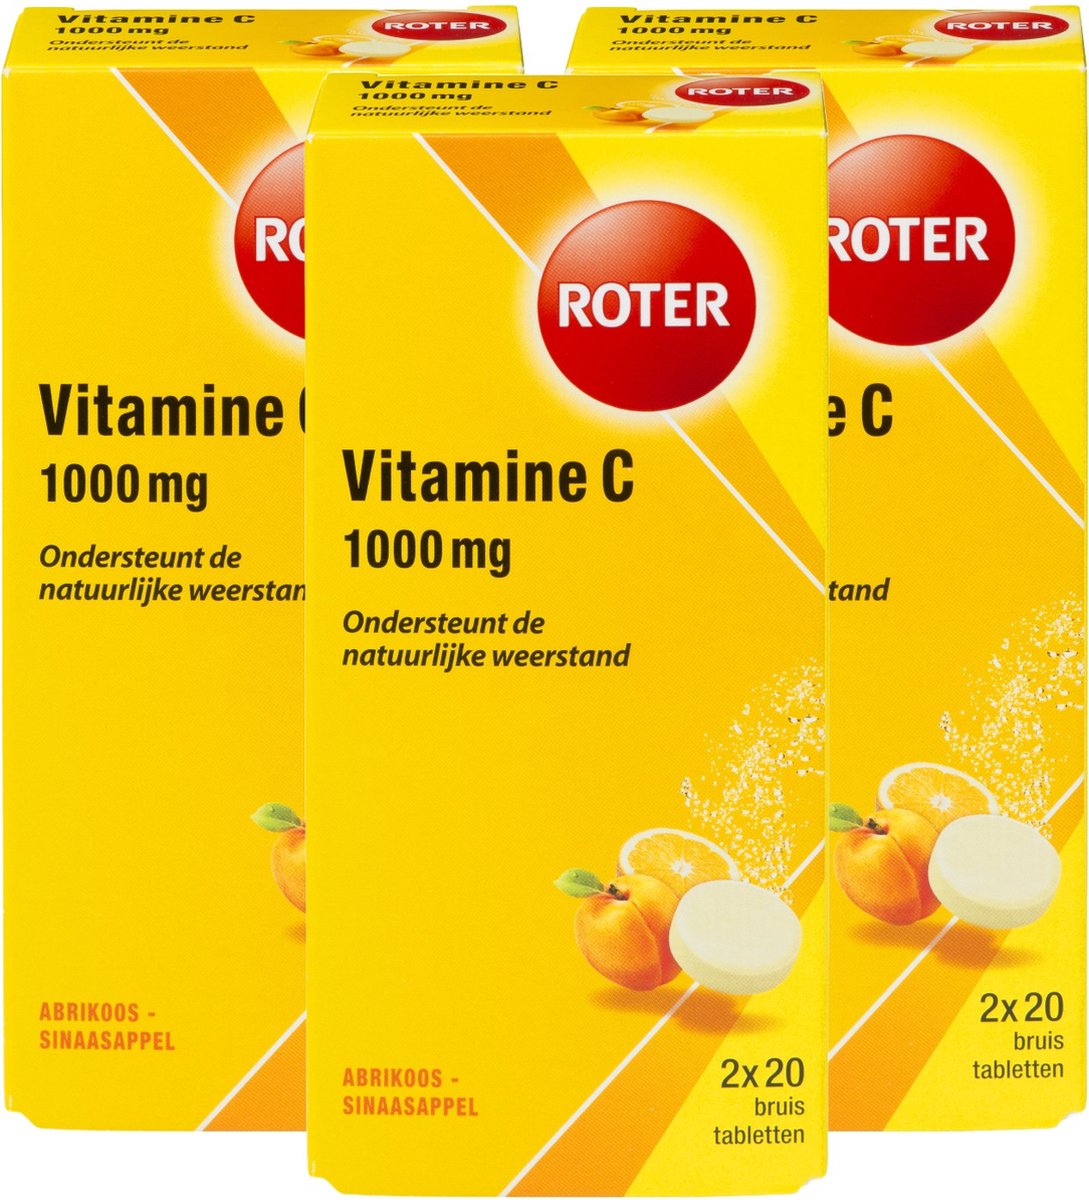 Roter Vitamine C 1000 mg - Vitaminen - Abrikoos-Sinaasappel - bruistabletten 3 pack (6 x 20 stuks)